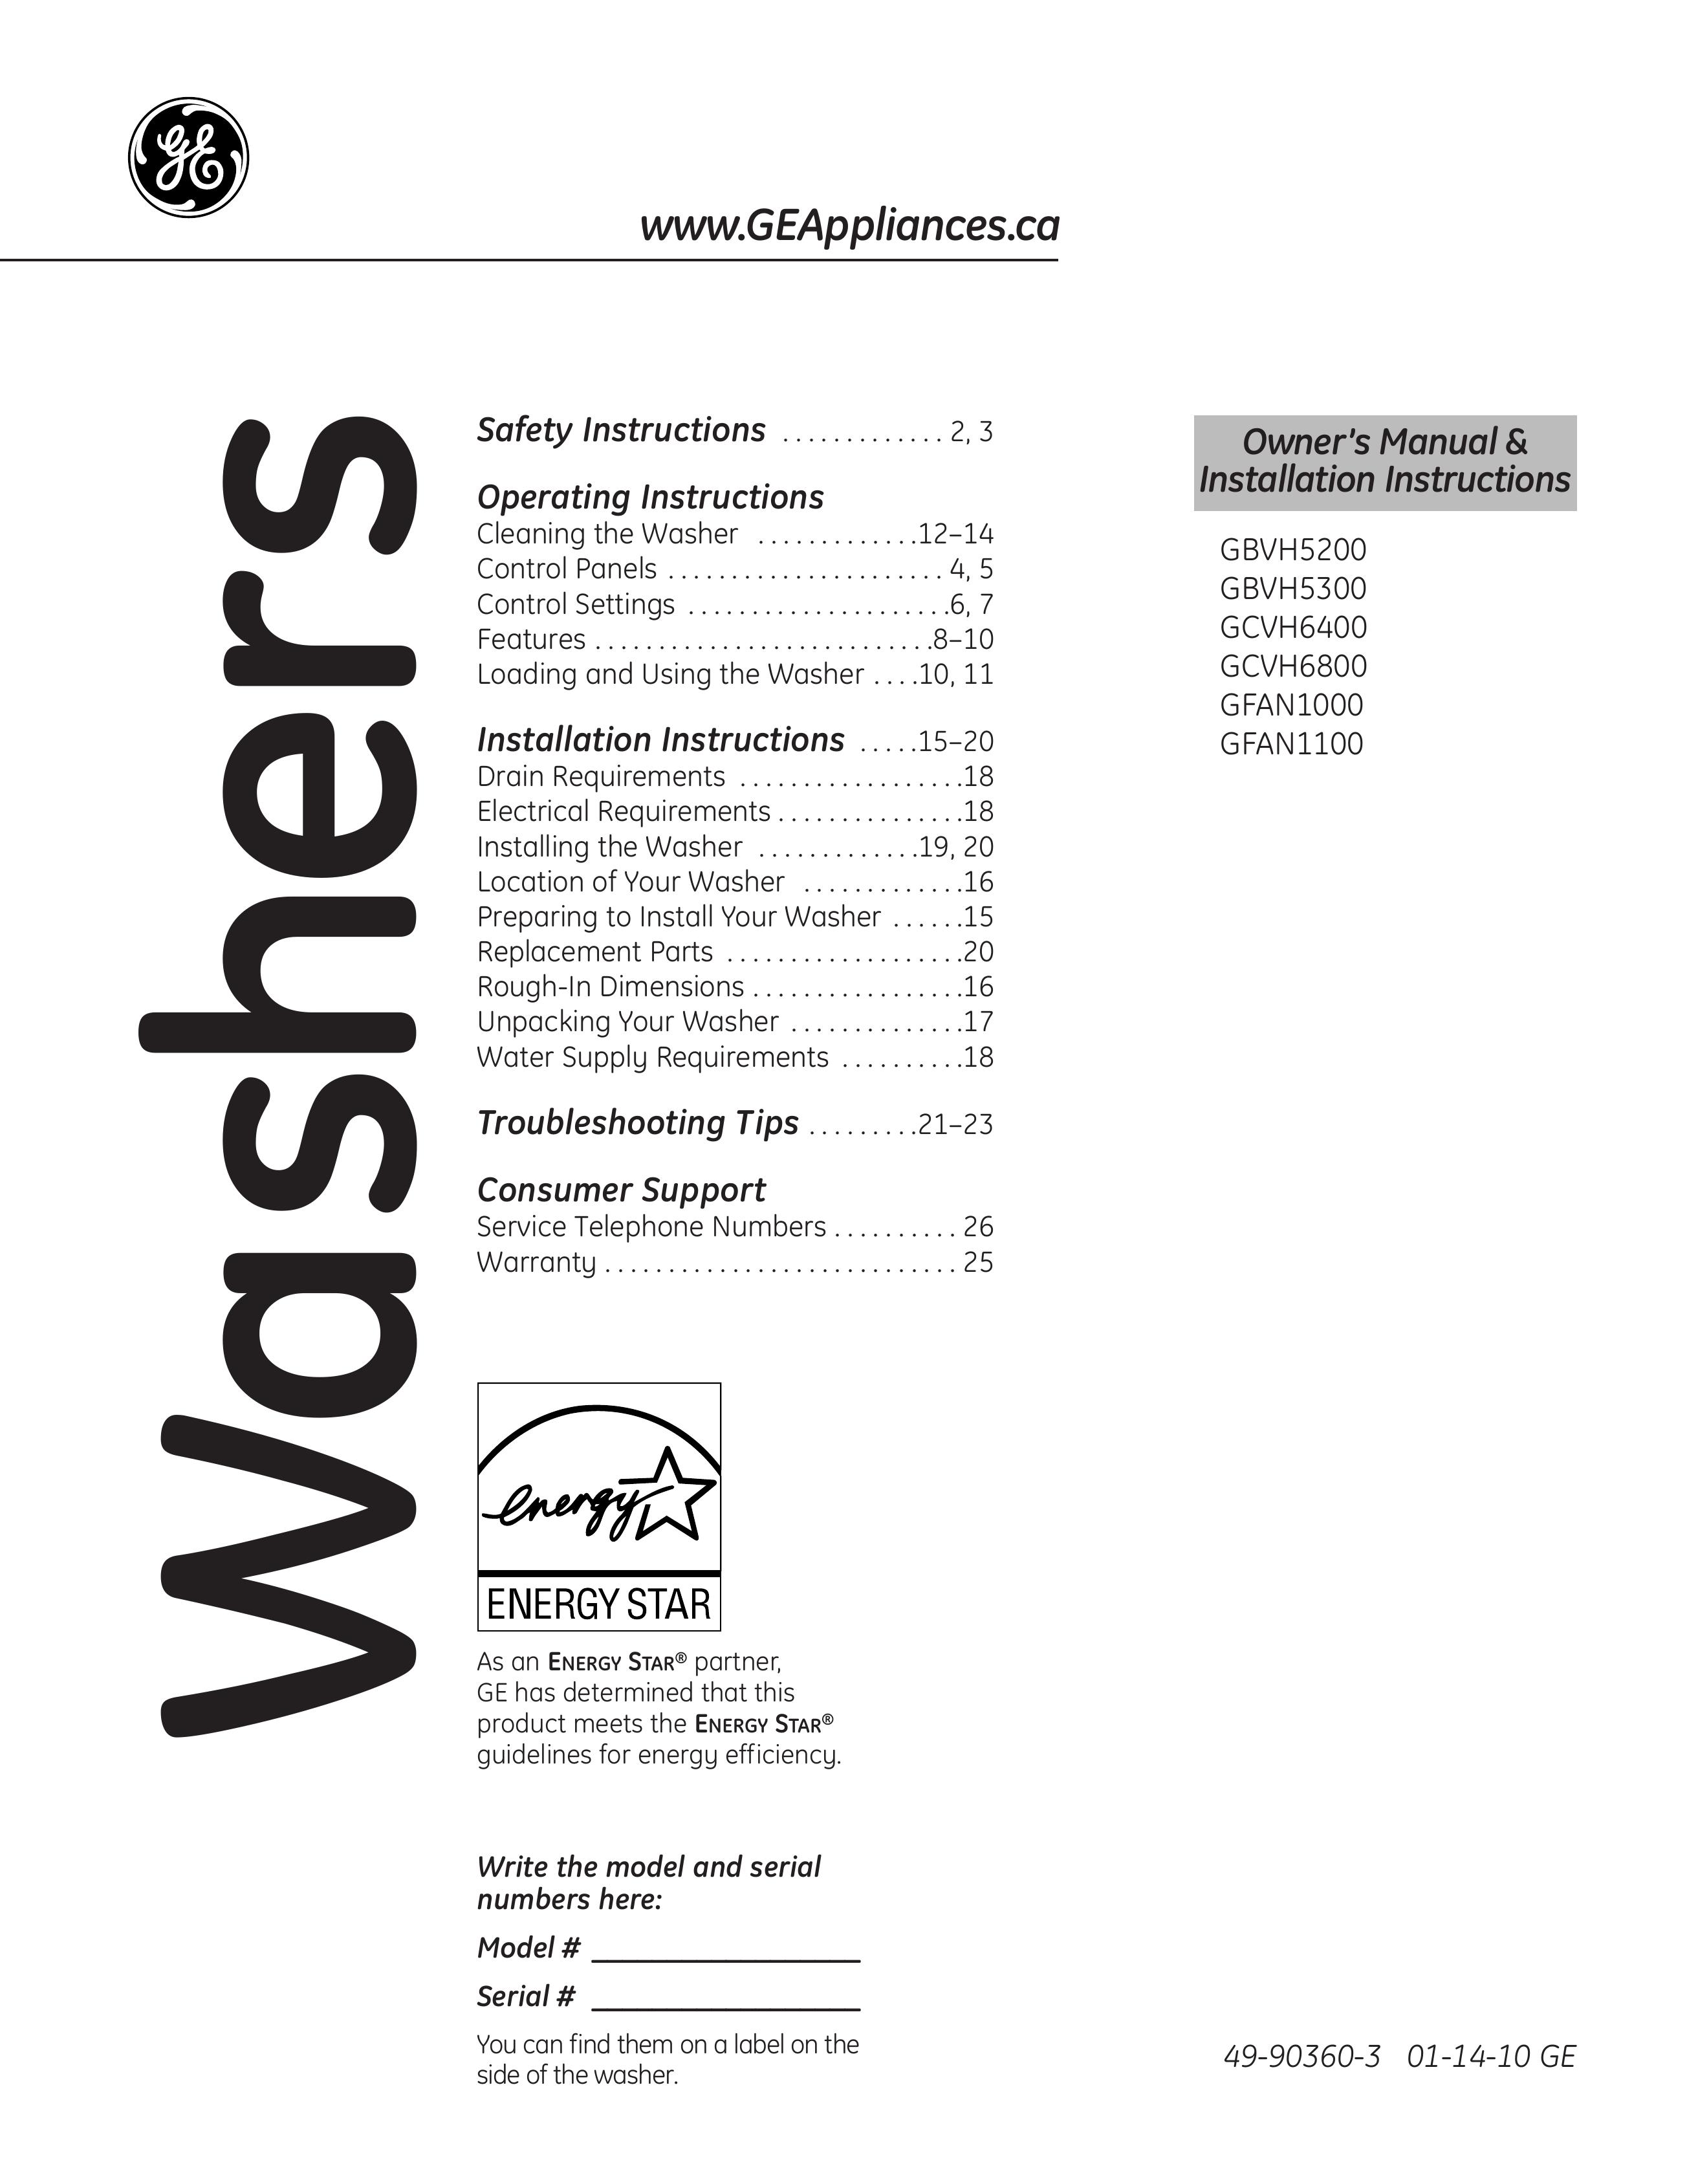 GE GFAN1000 Washer User Manual